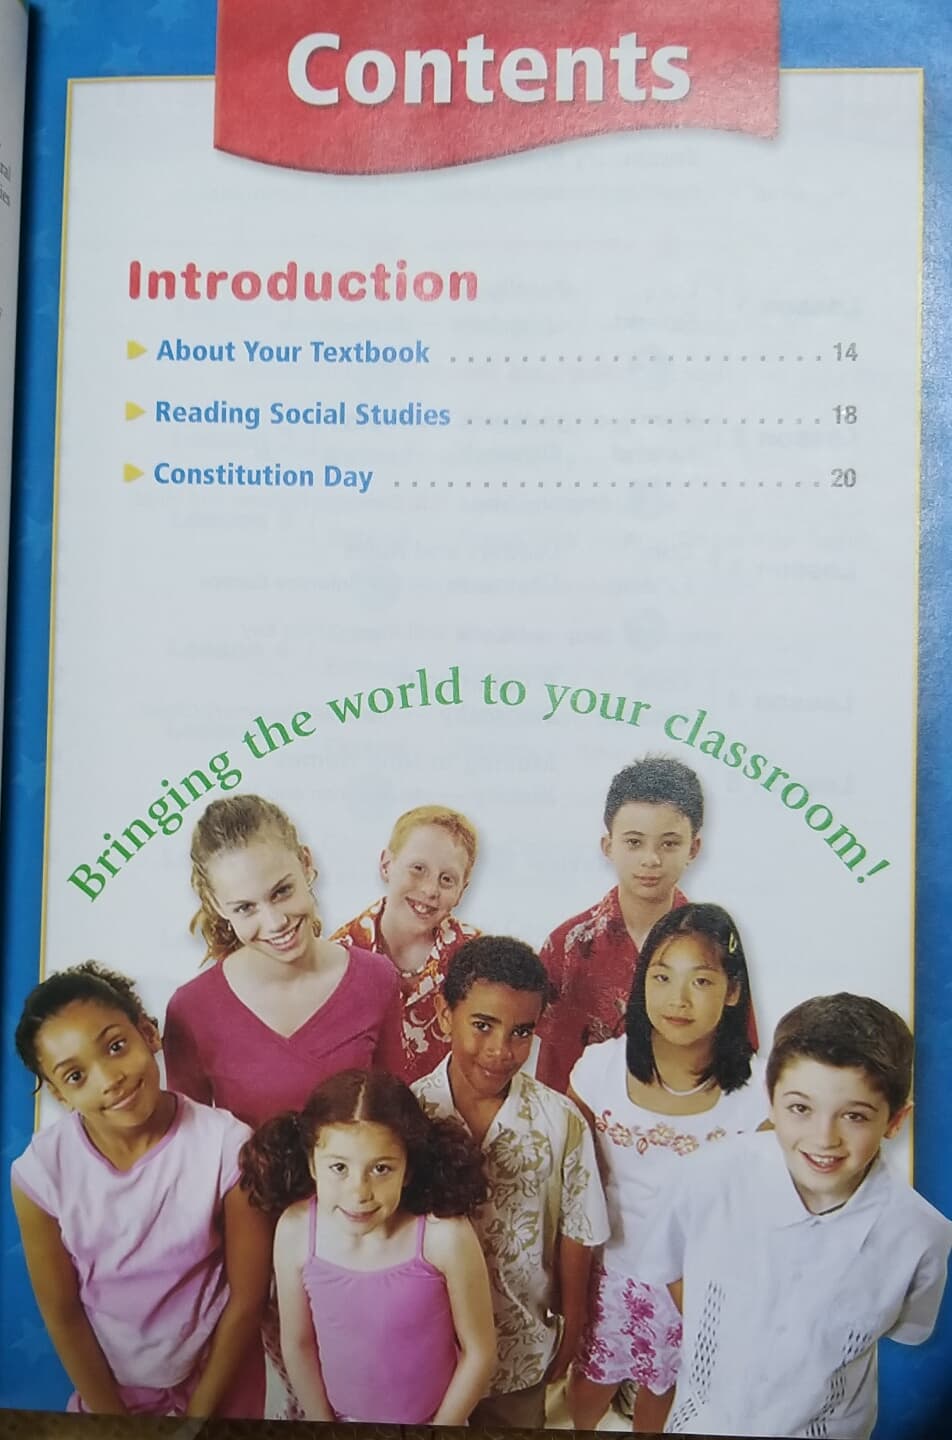 Houghton Mifflin Social Studies:School and Family Hardcover